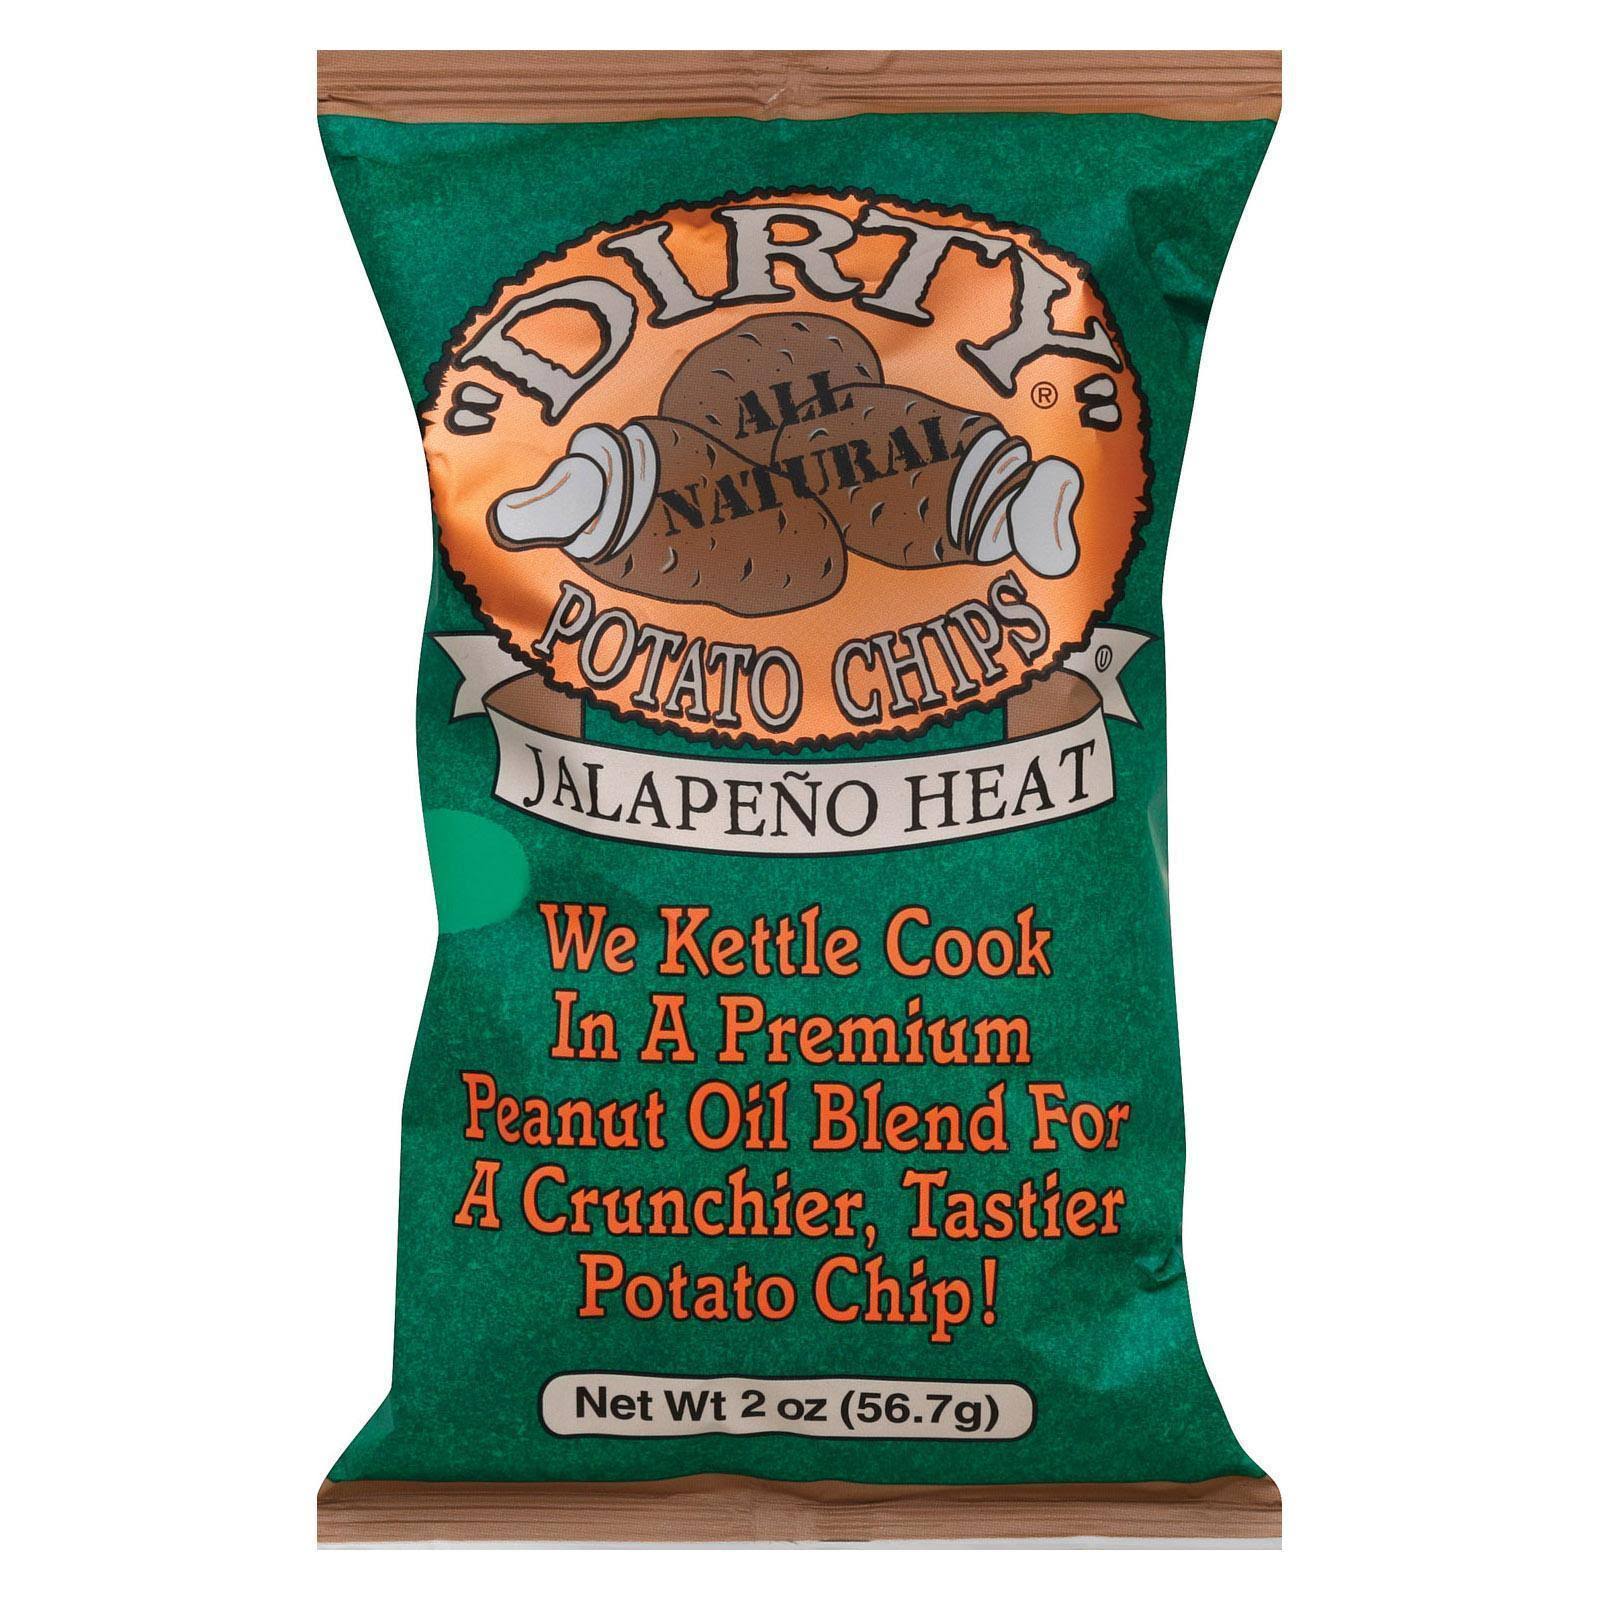 Dirty Potato Chips Jalapeno Heat 2 oz -Pack of 25